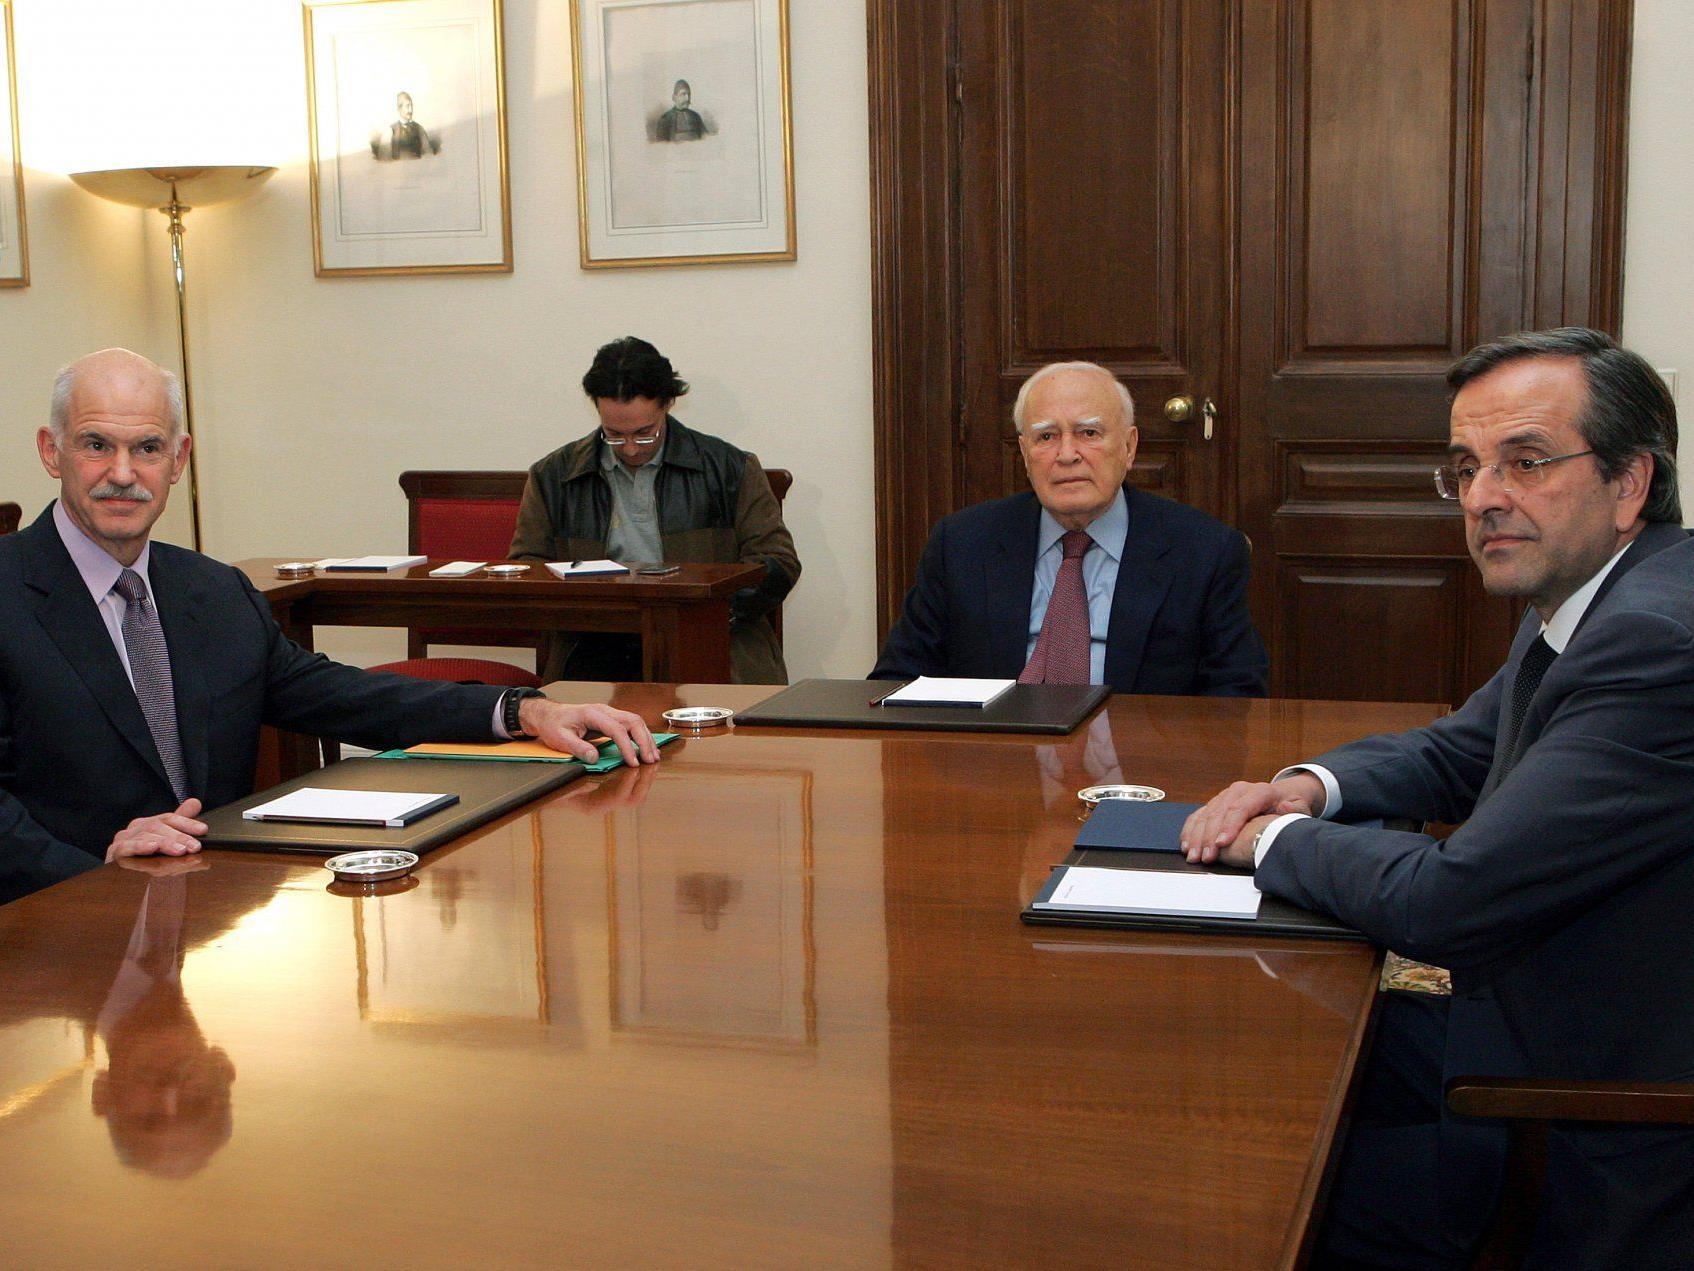 v.l.n.r.: Ministerpräsident Giorgos Papandreou, Staatspräsident Karolos Papoulias und Oppositionsführer Antonis Samaras.